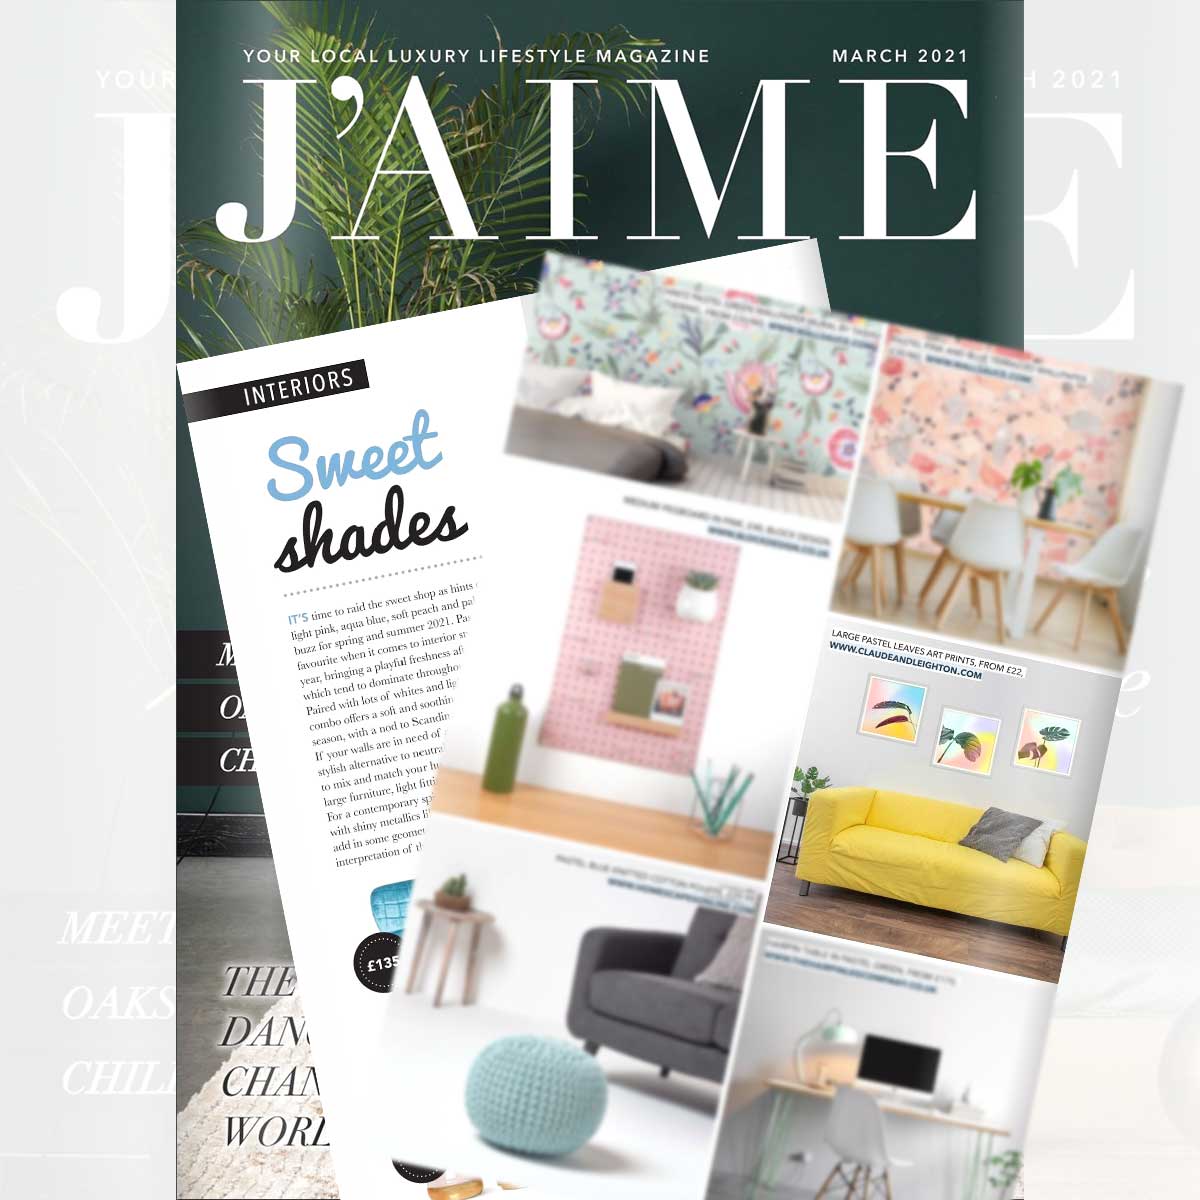 J'AIME Magazine - March 2021